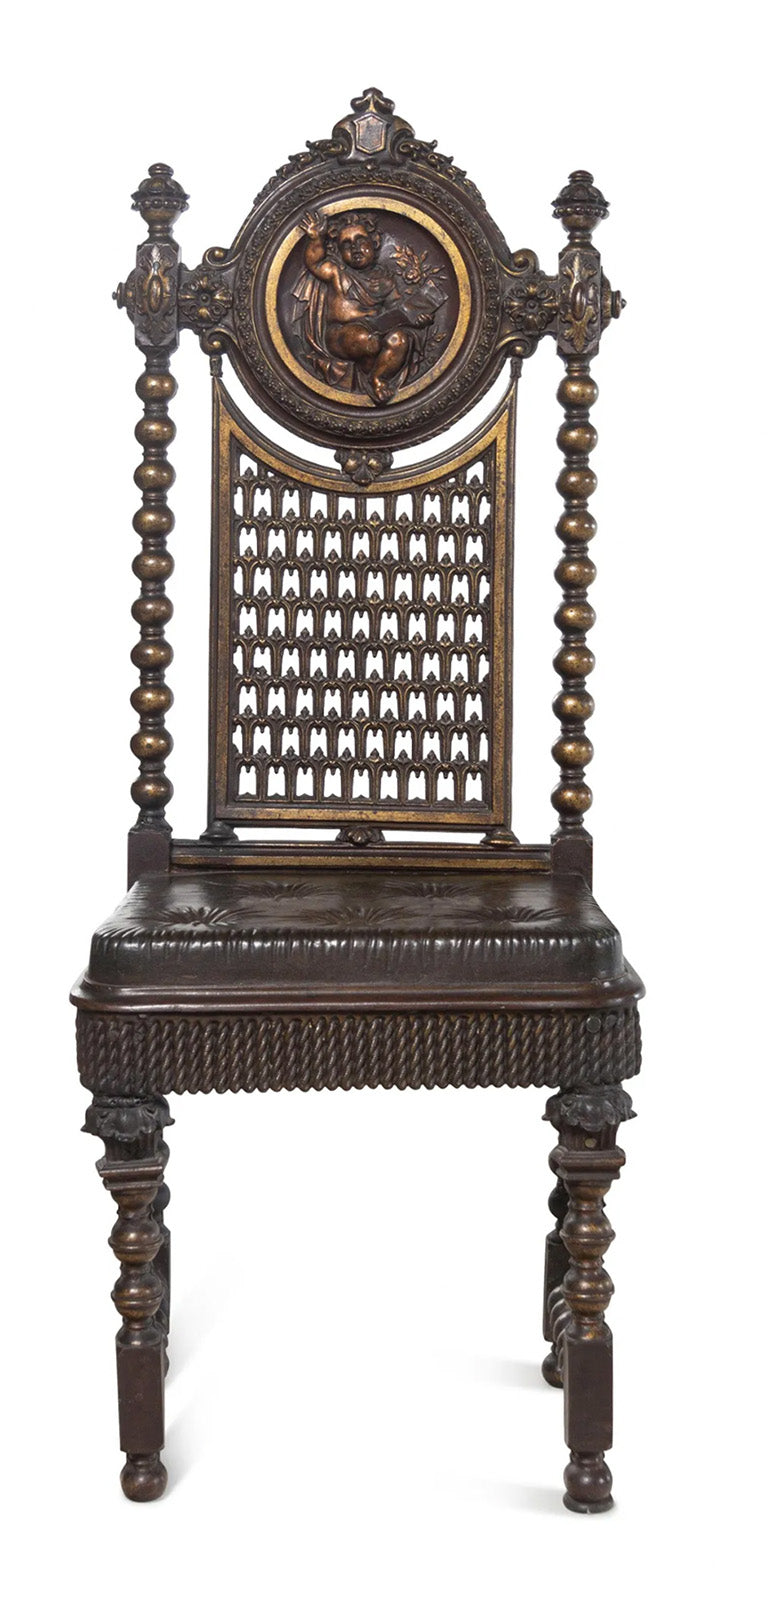 19th Century English Renaissance Revival Style Bronzed Metal Chair